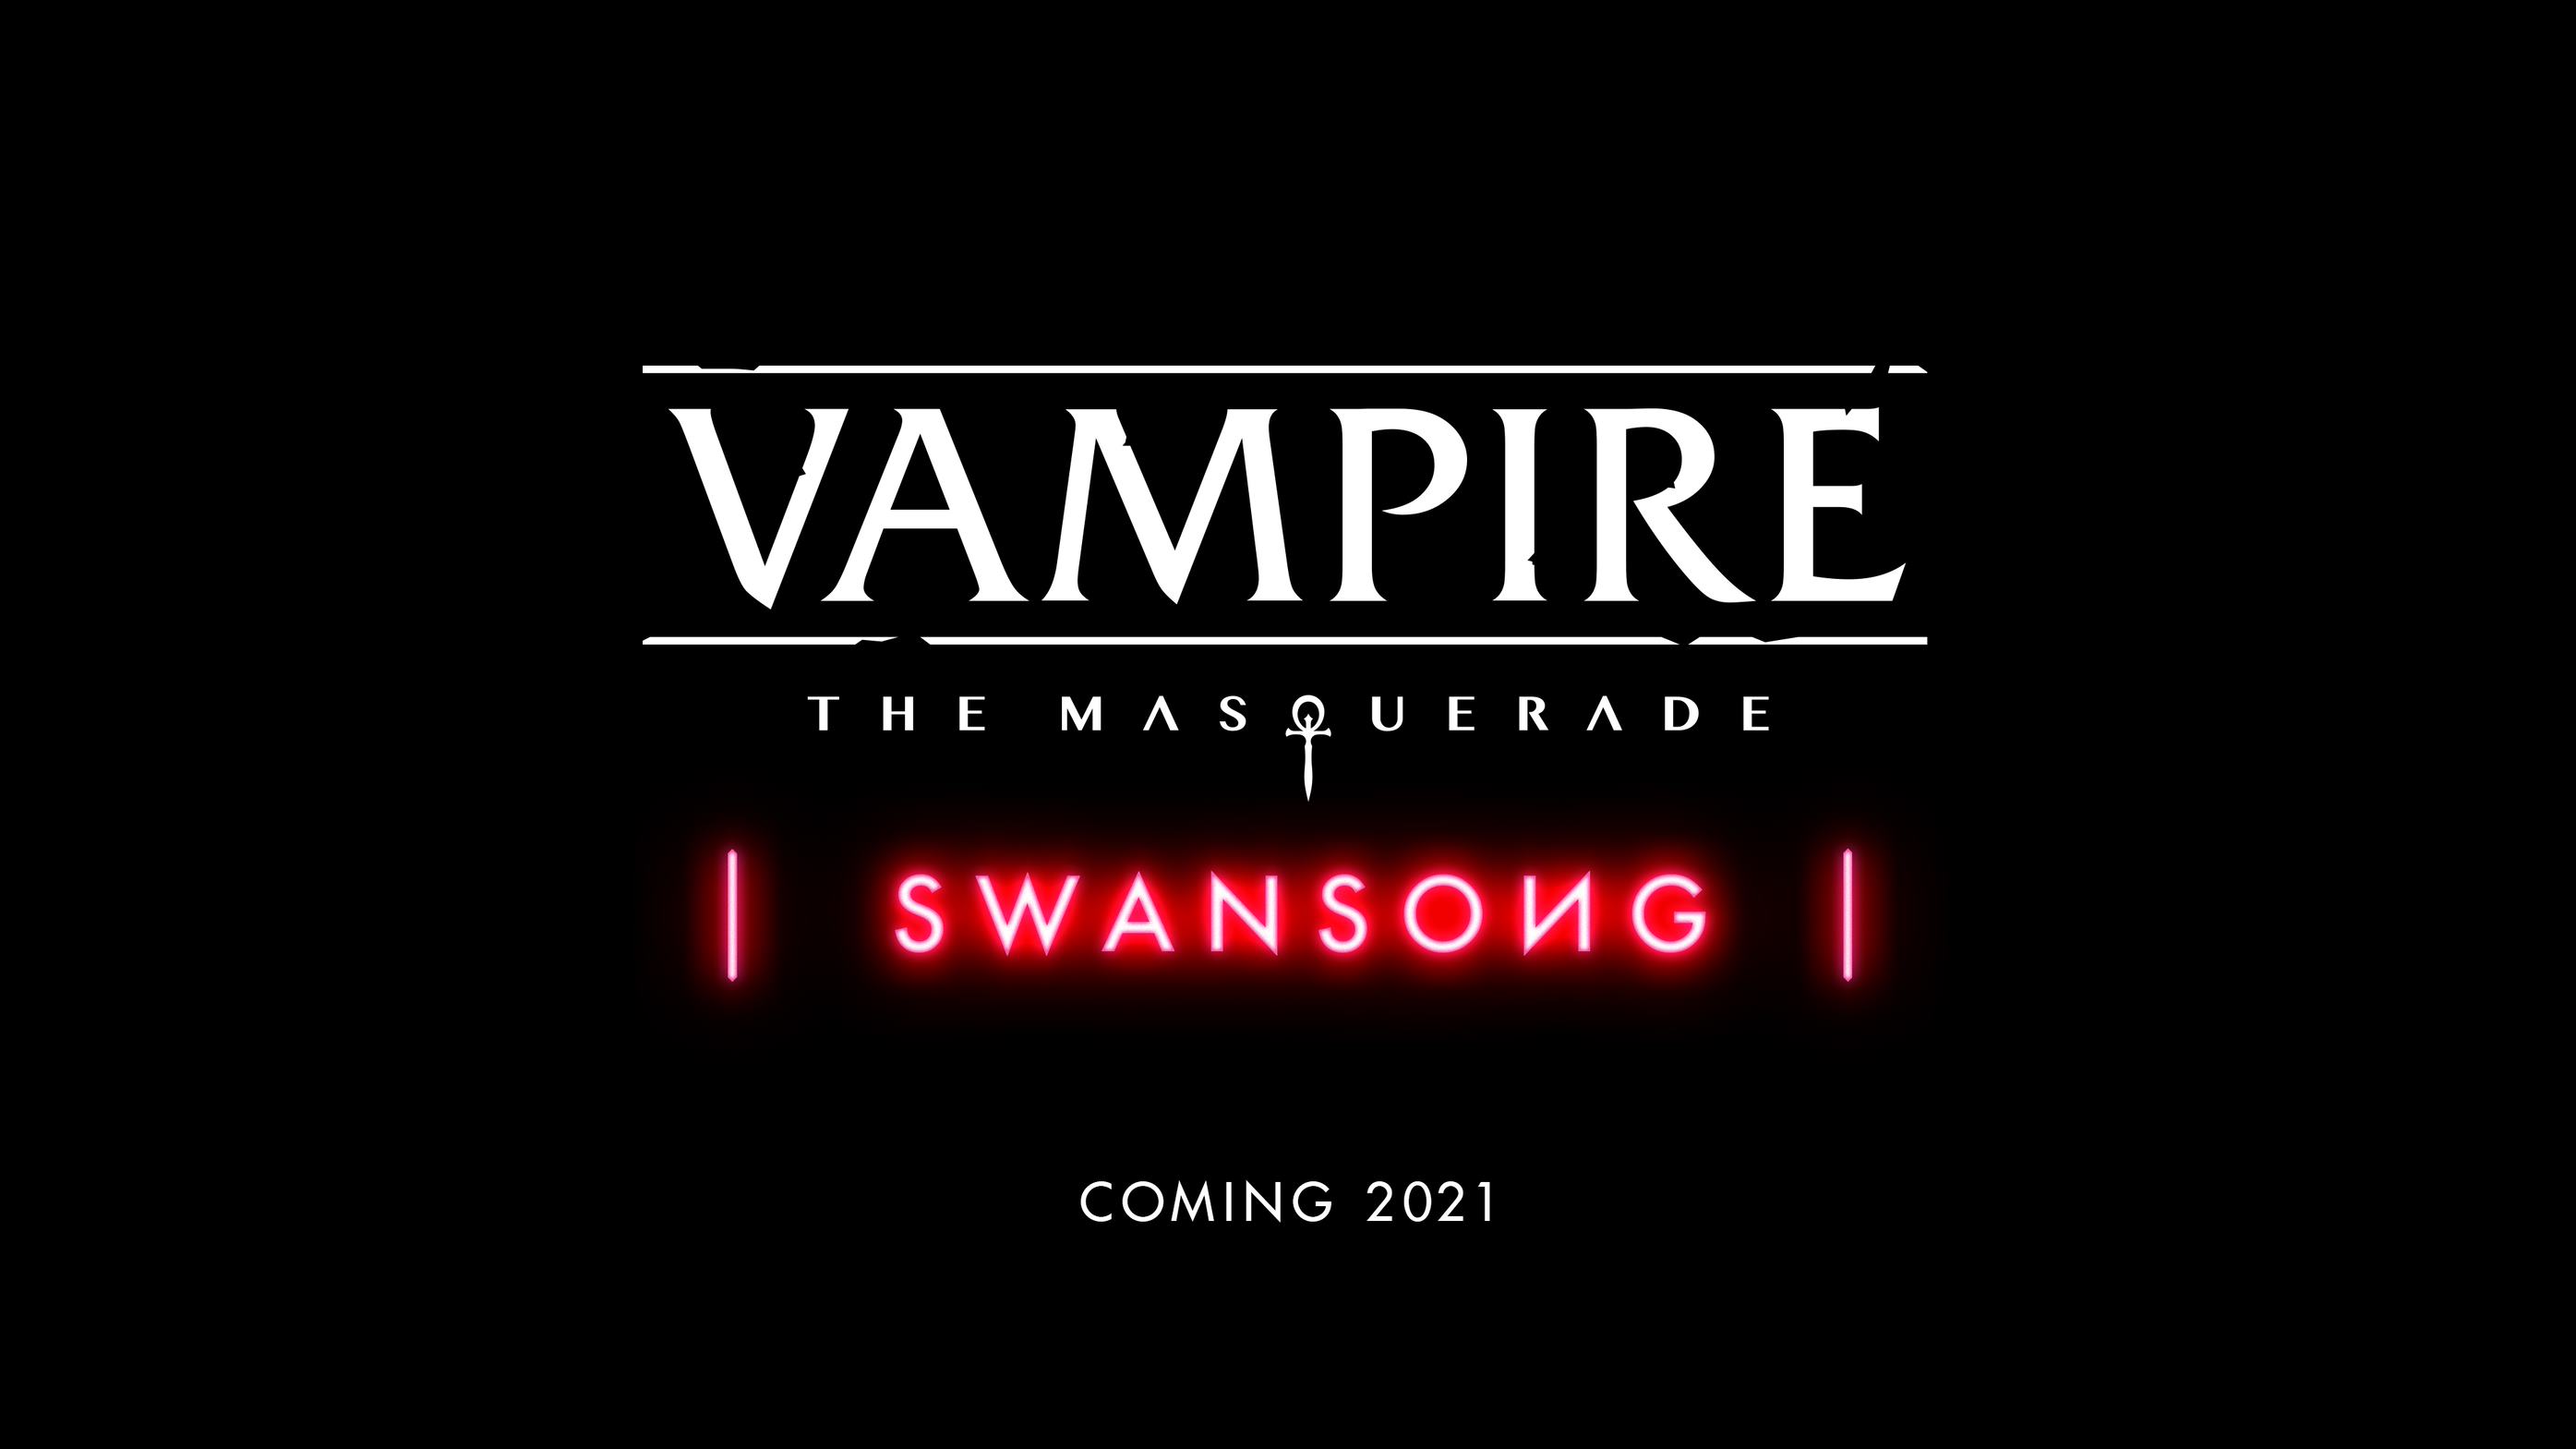 VAMPIRE: THE MASQUERADE - SWANSONG RINNOVA I SUOI RPG NARRATIVI